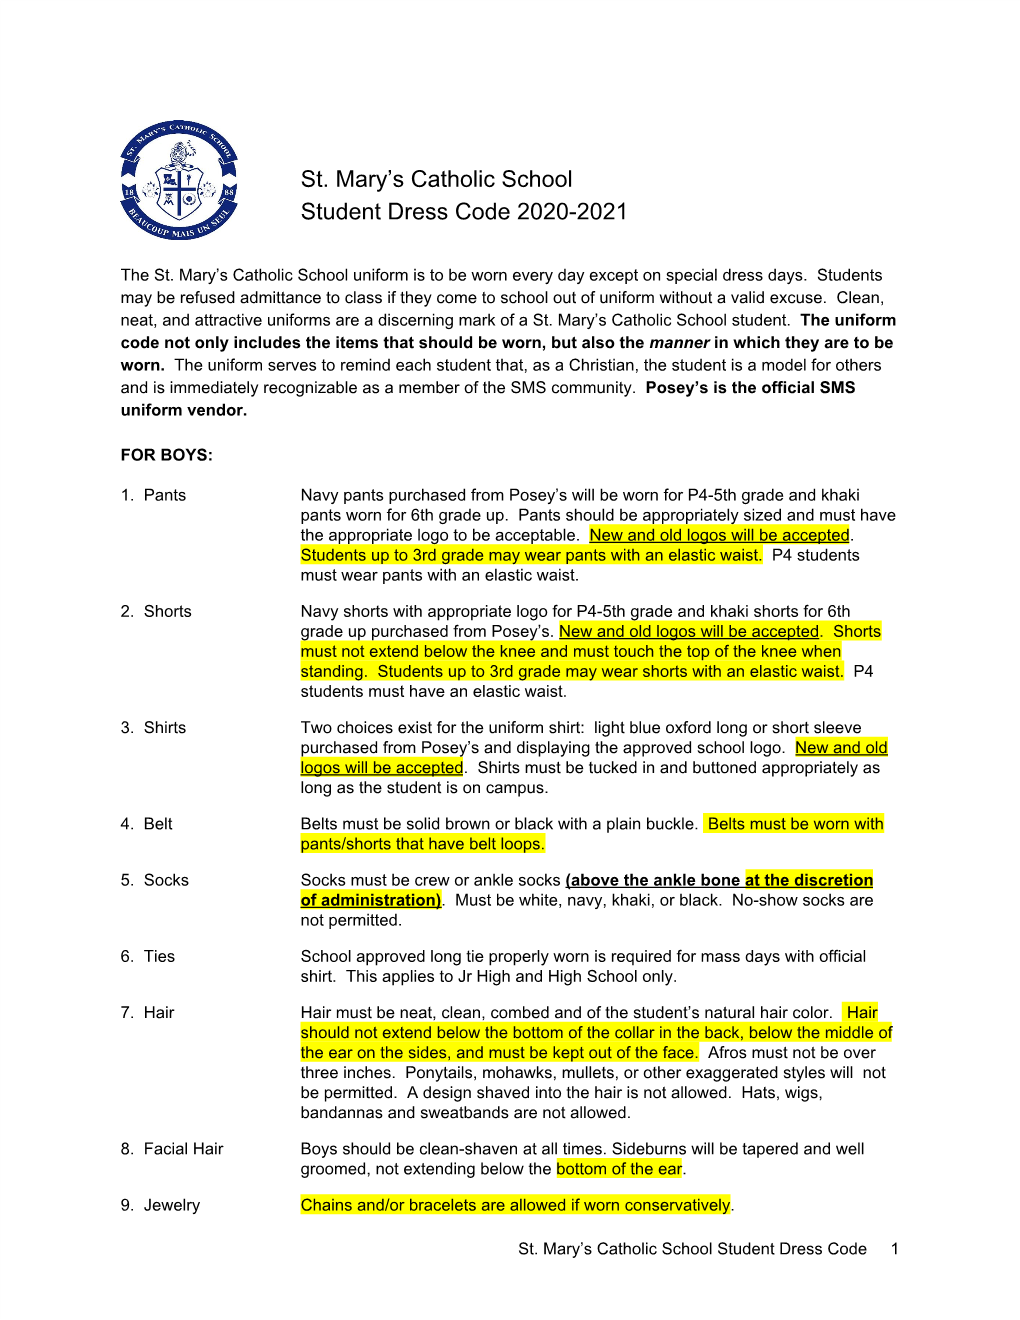 St. Mary's Catholic School Student Dress Code 2020-2021